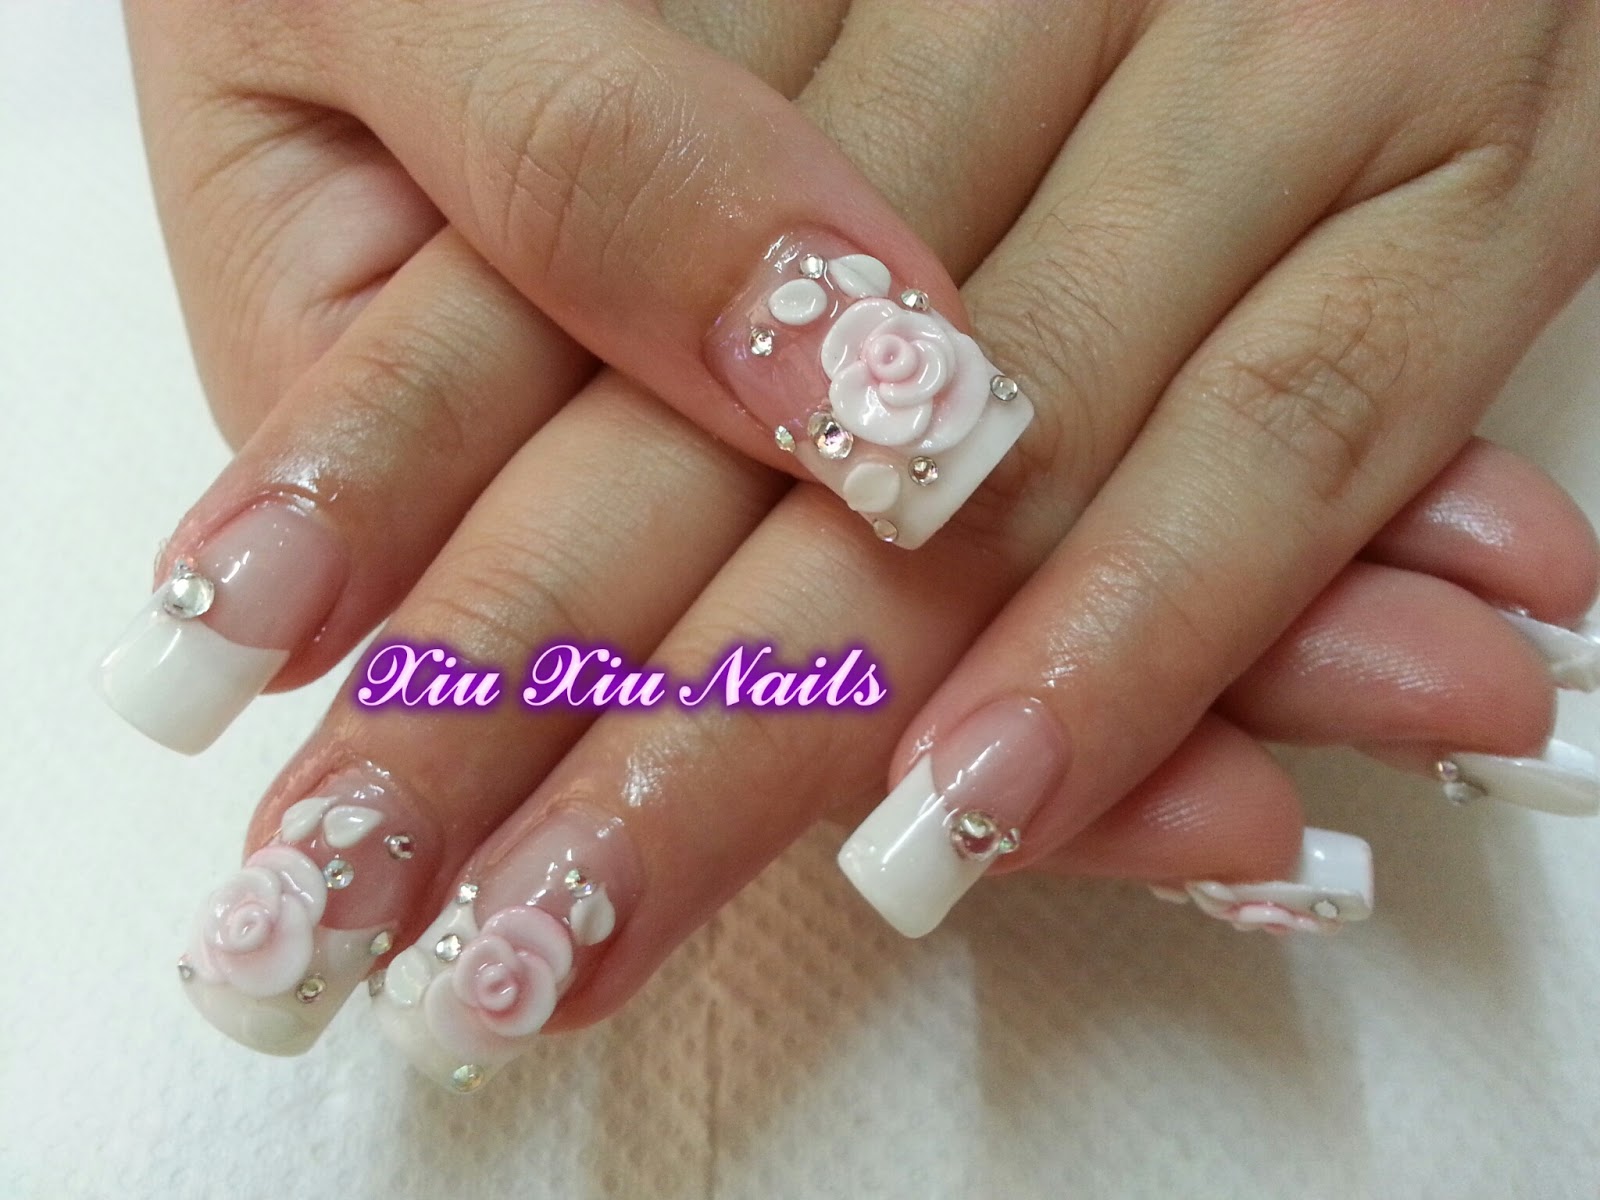 Xiu xiu nails: Bridal Nails